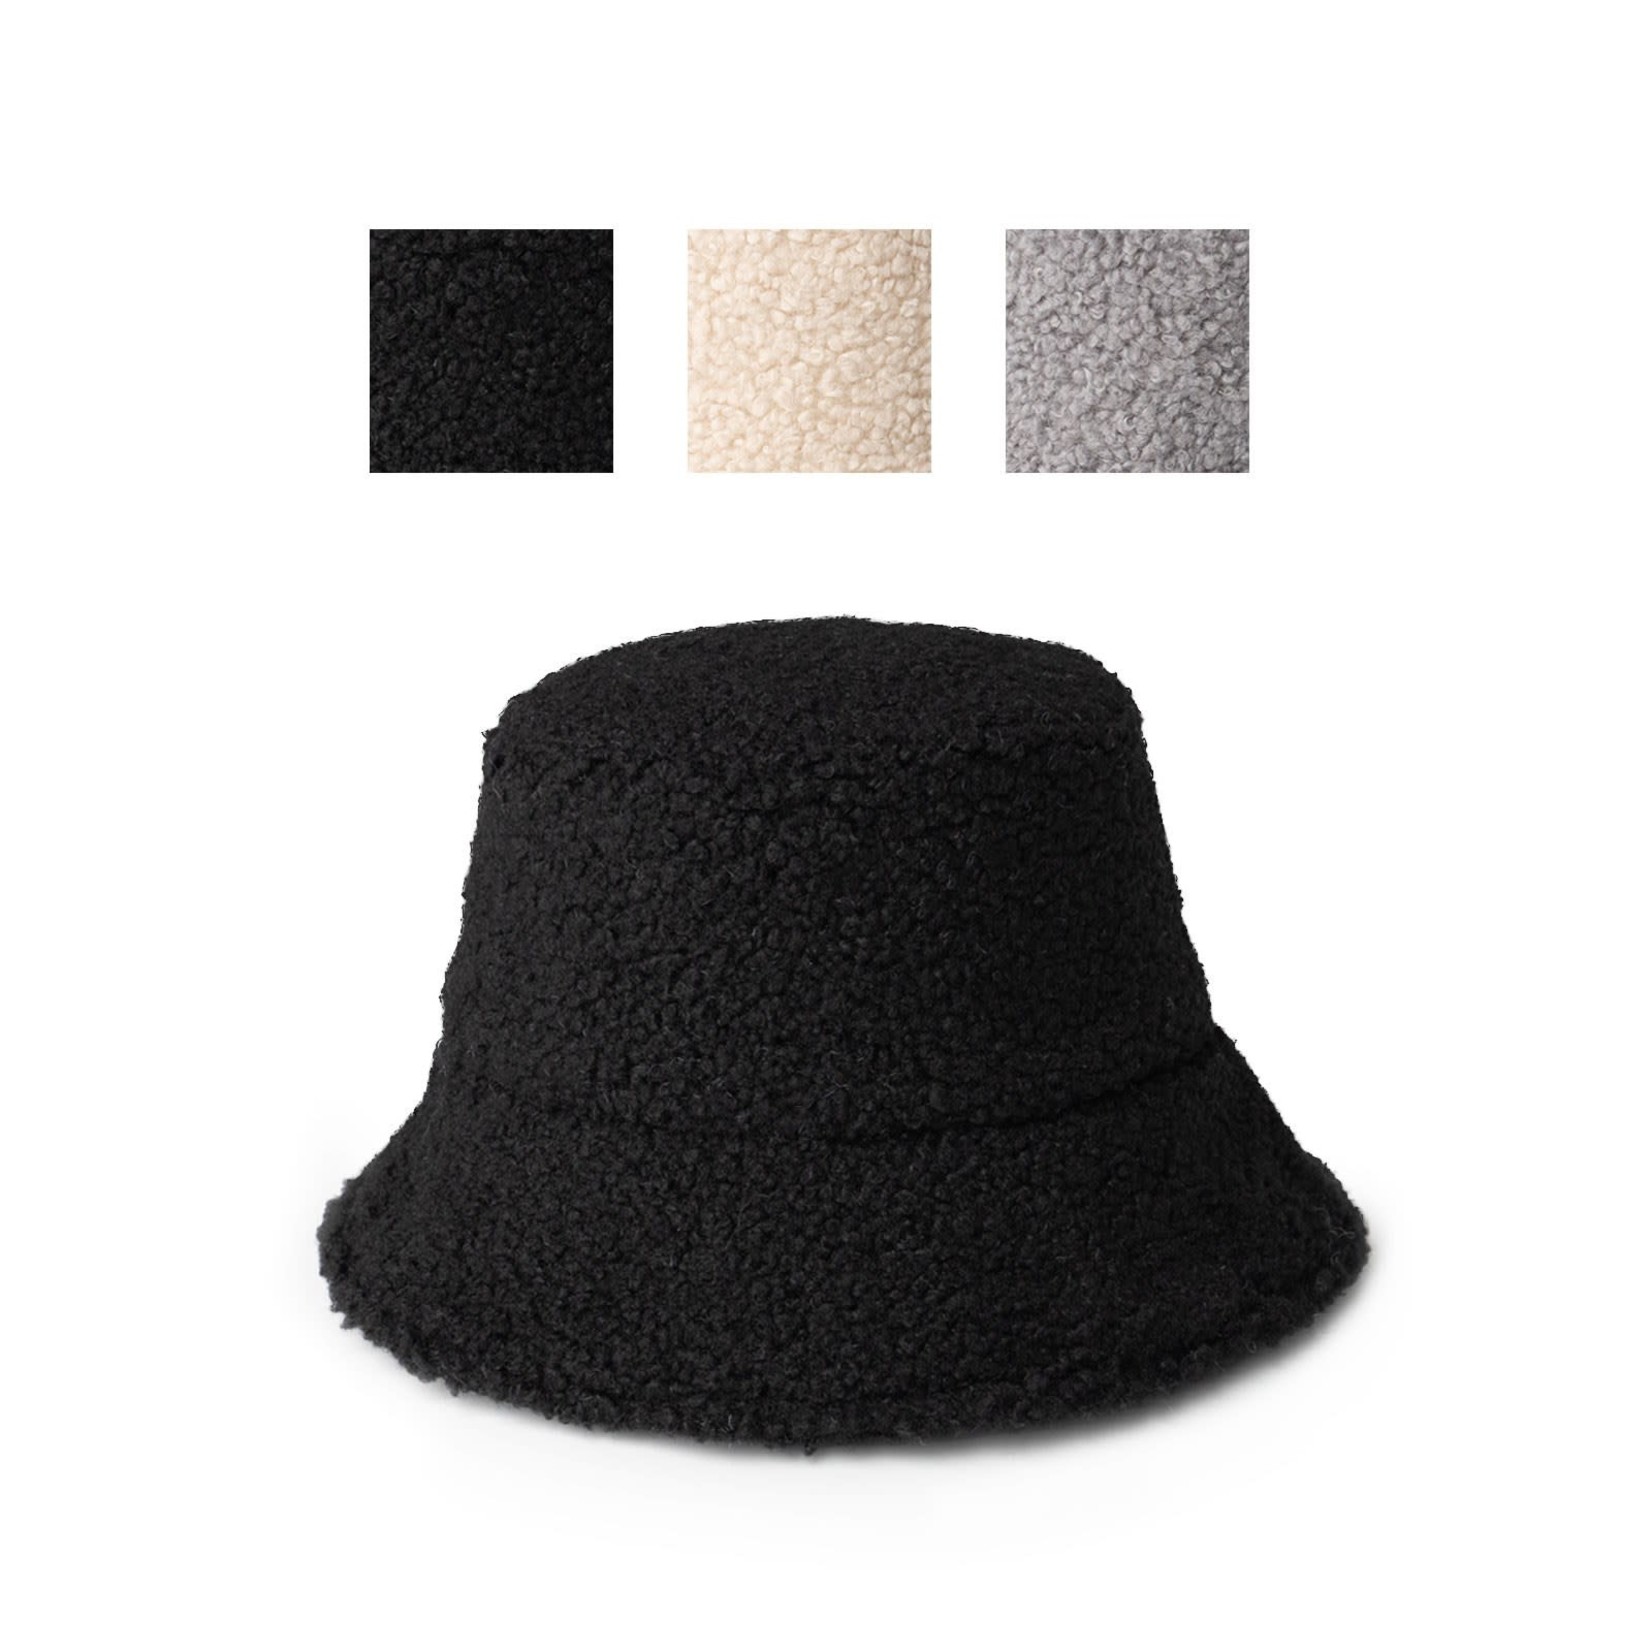 Britt's Knits Britt's Knits: Reversible Sherpa Bucket Hat: